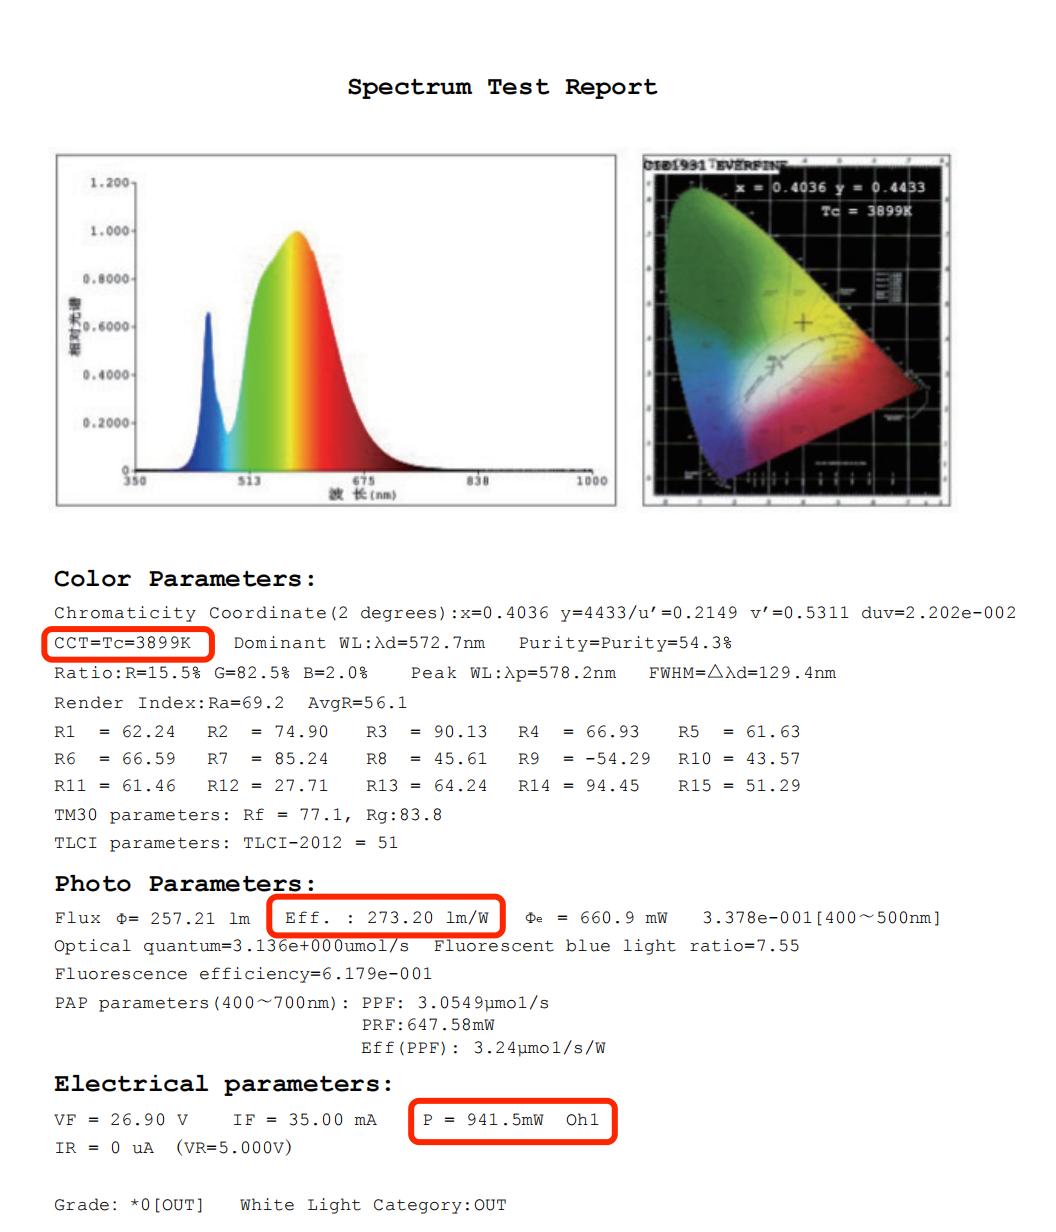 Spectrum_Test_Report.jpg